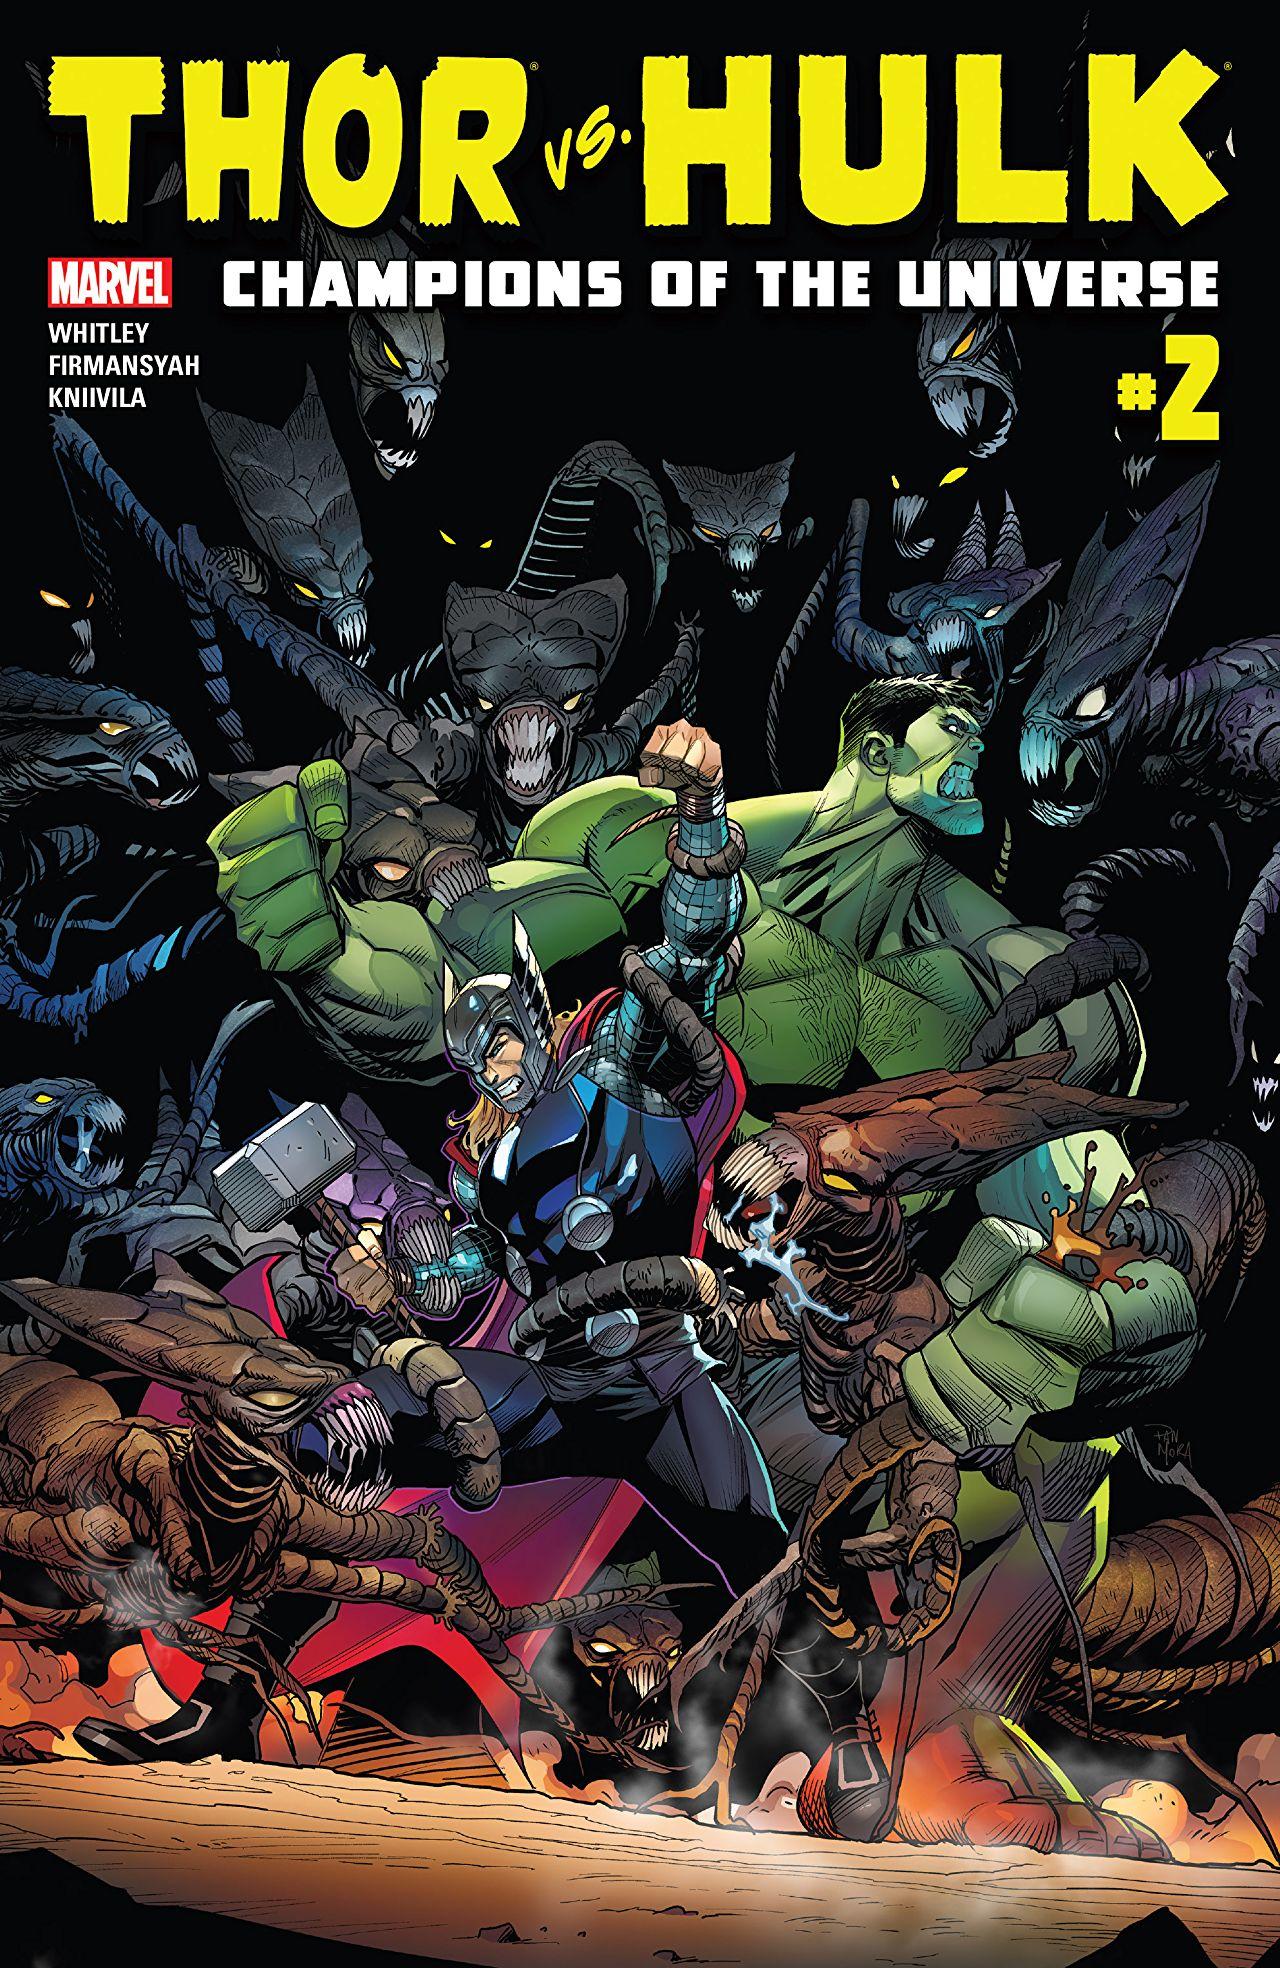 Thor vs. Hulk: Champions of the Universe Vol. 1 #2